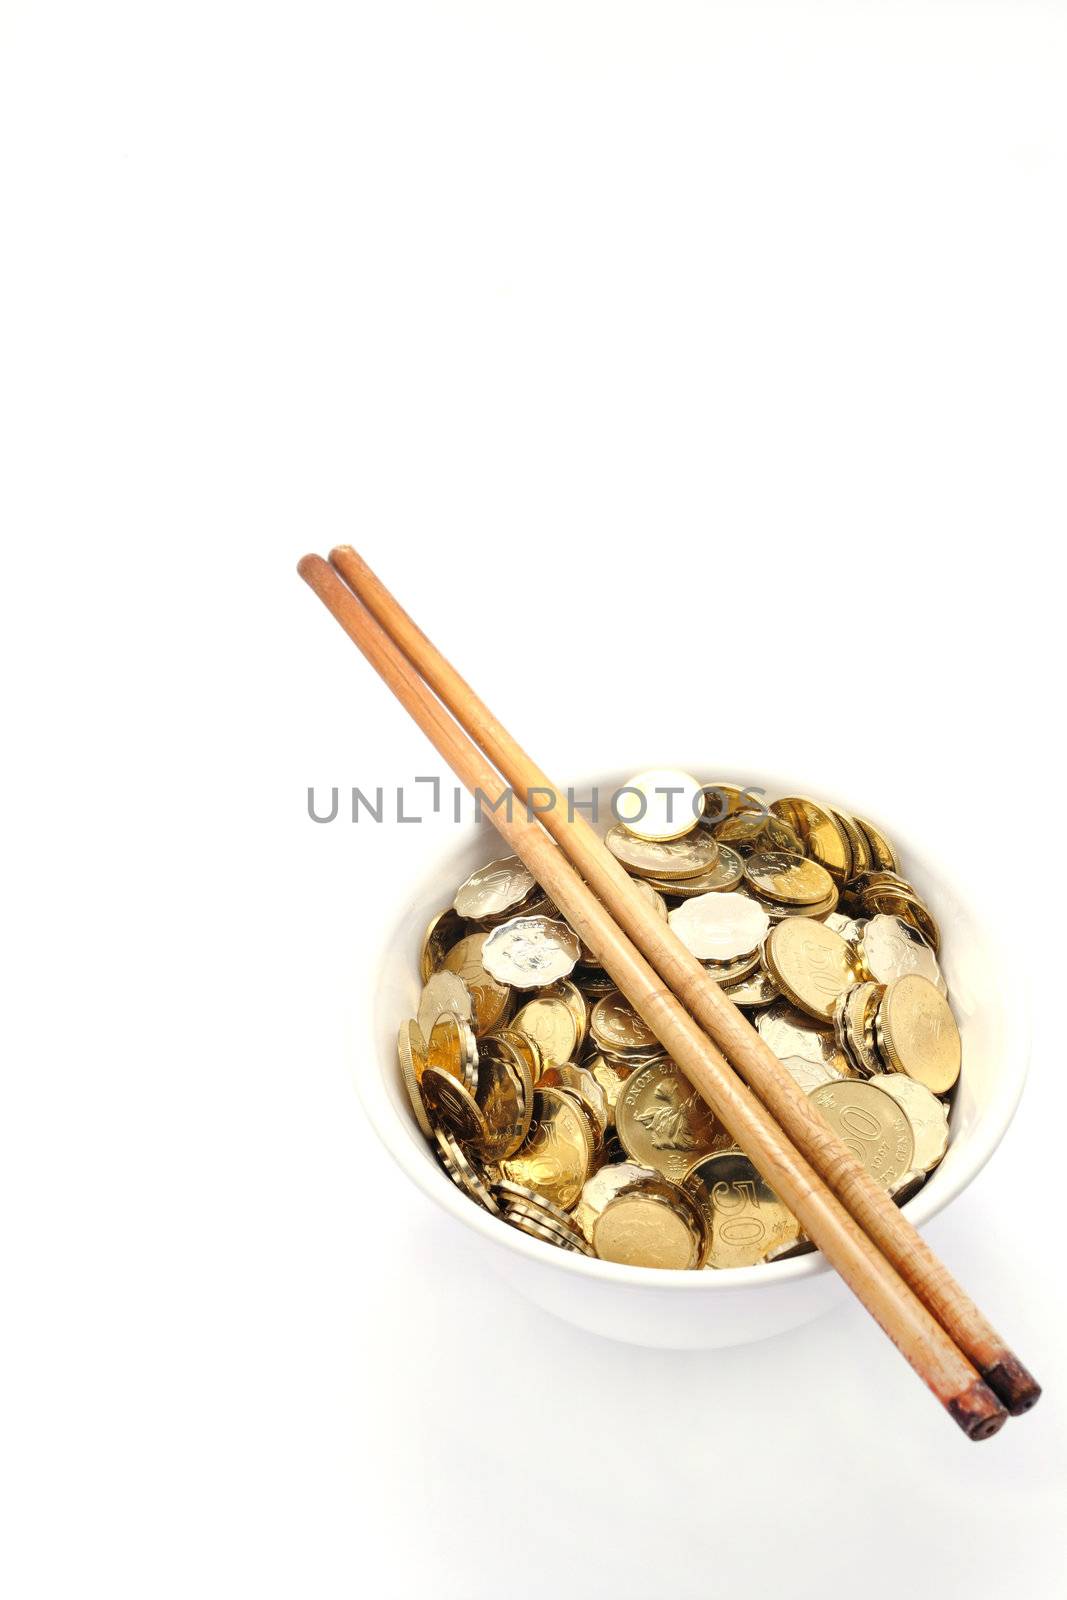 a bowl of money with chopsticks